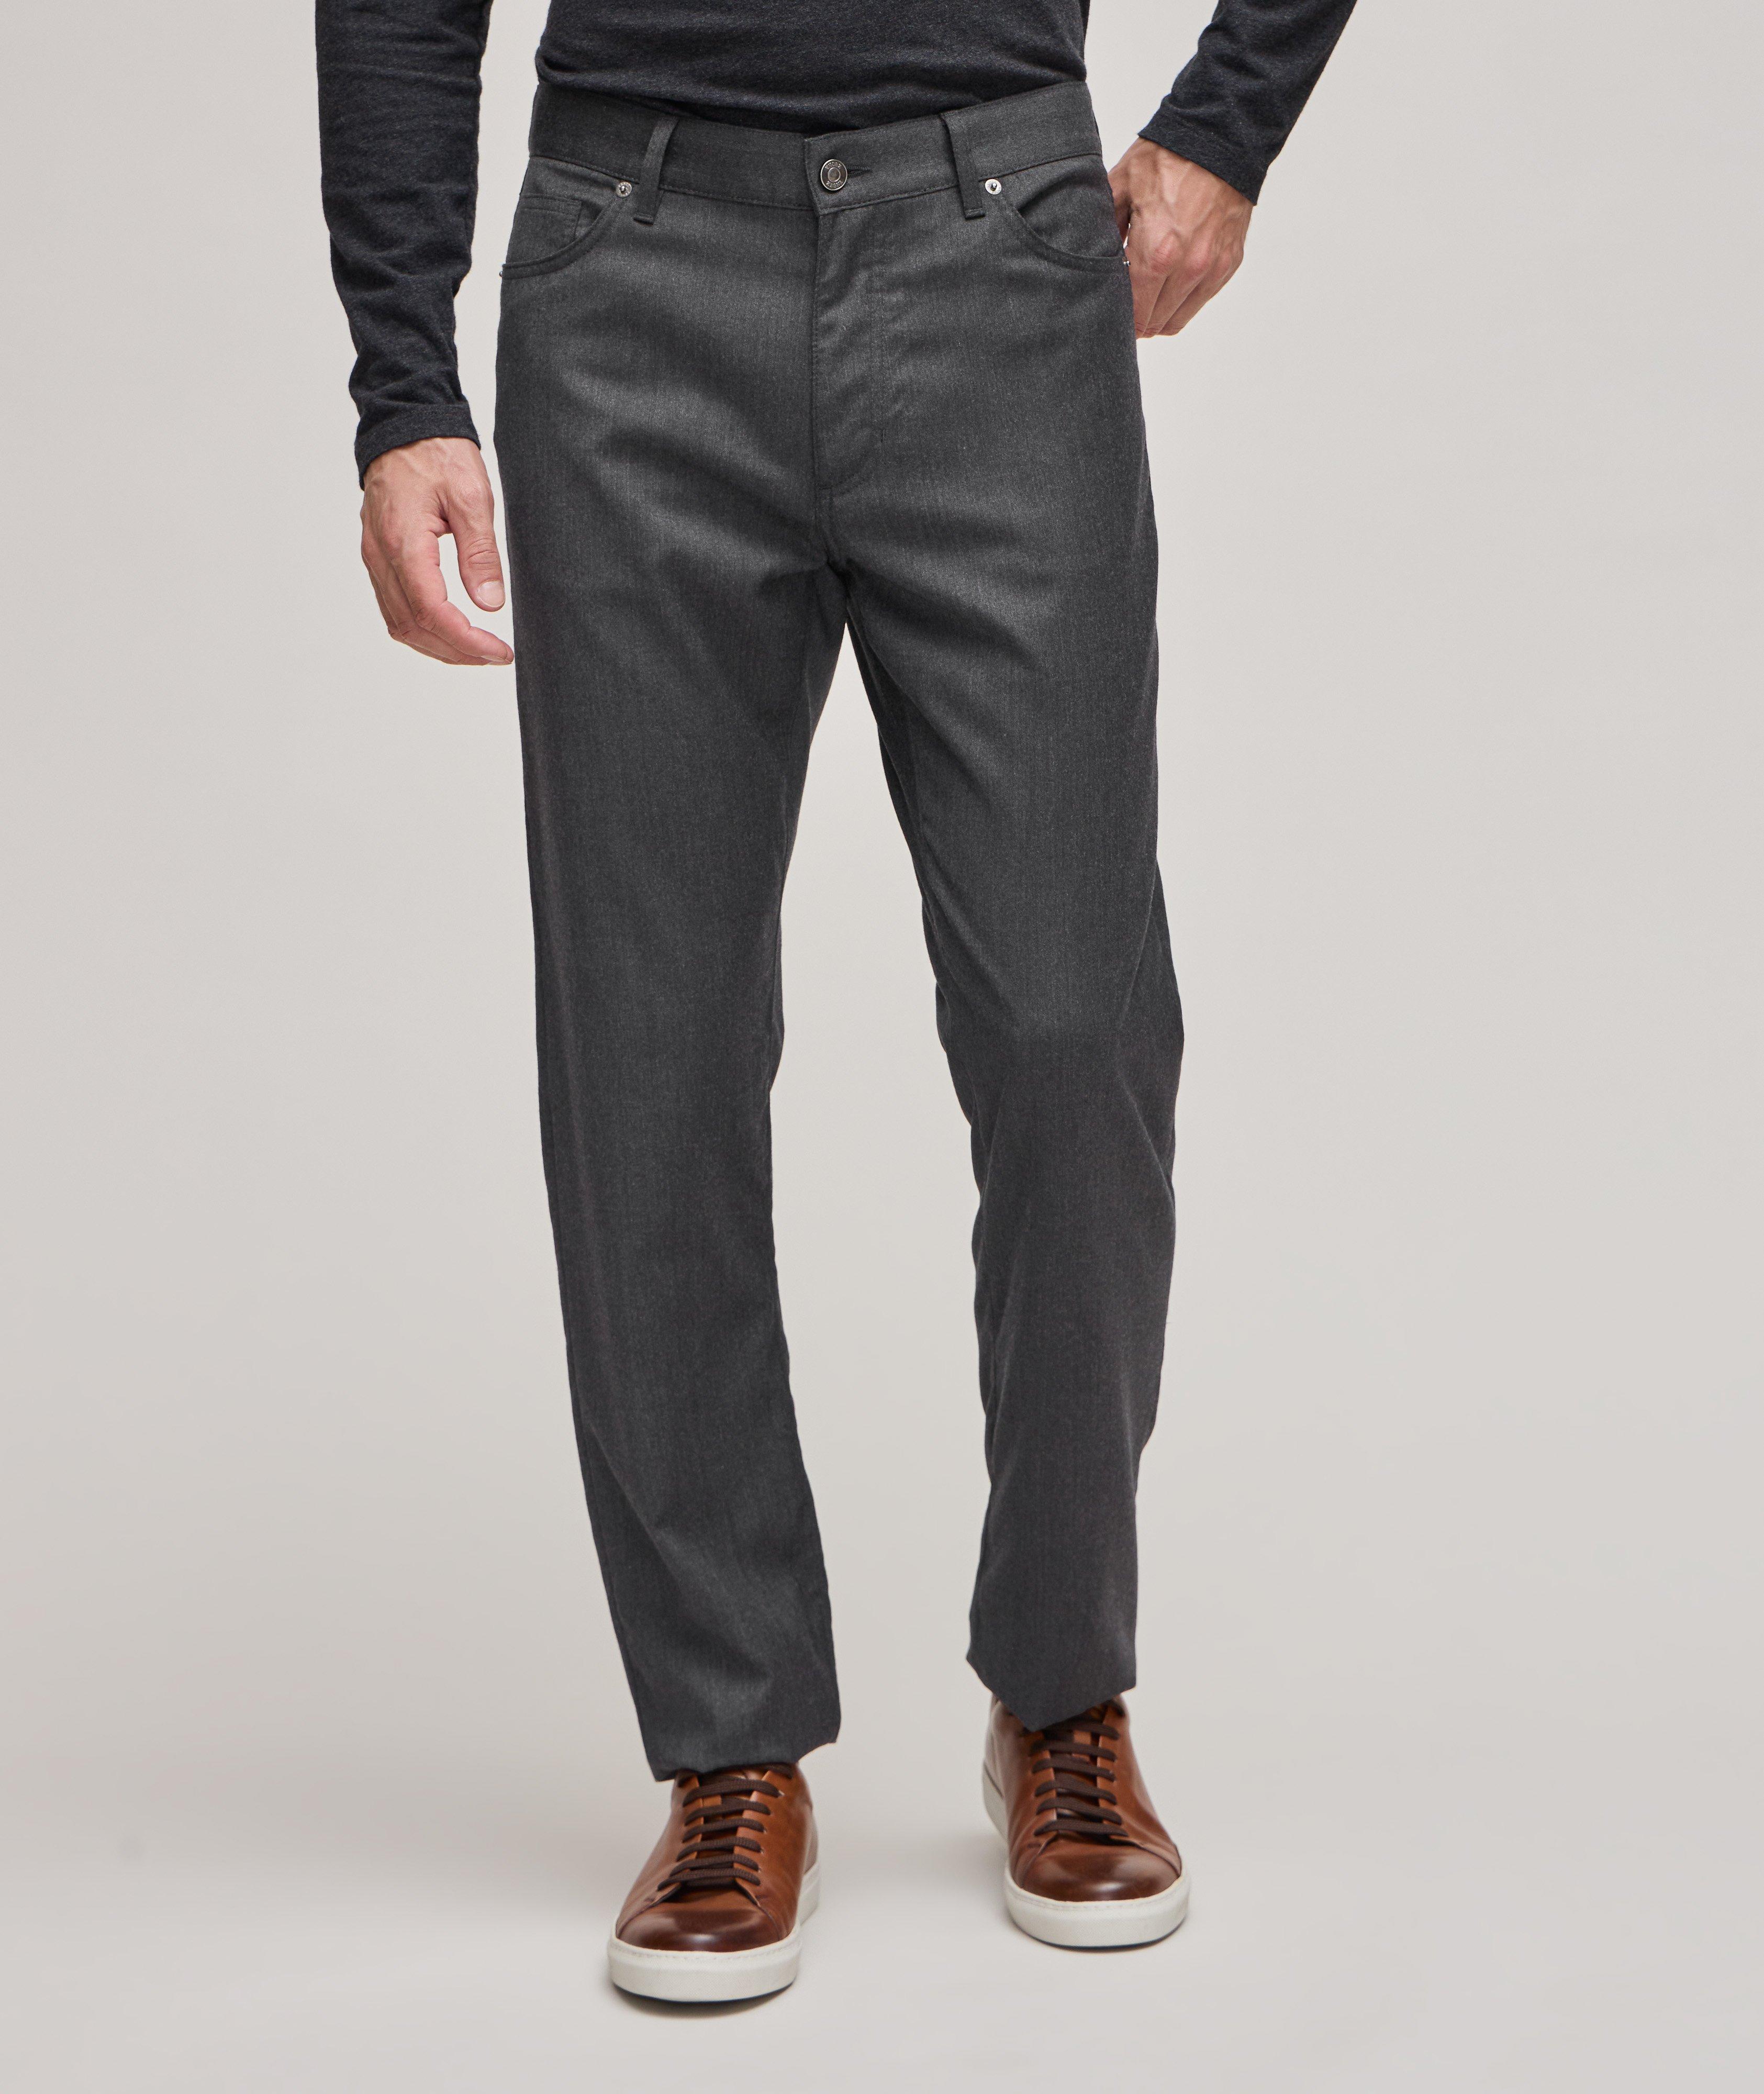 Zegna City Wool Flannel Five-Pocket Pants, Pants